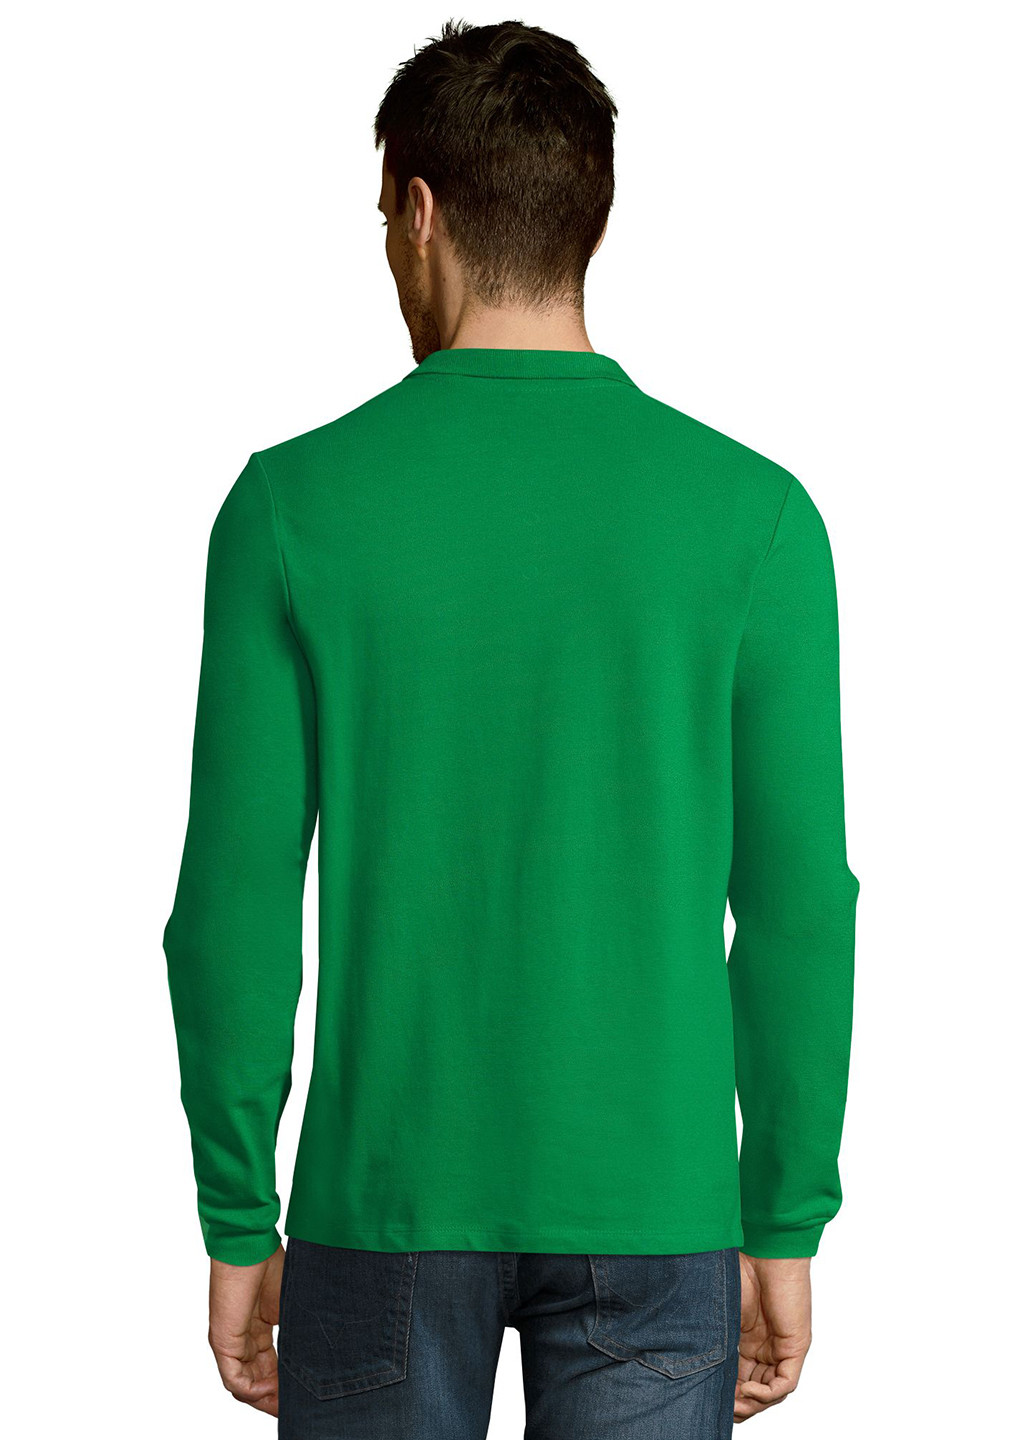 Светло-зеленая футболка-поло для мужчин Sol's однотонная